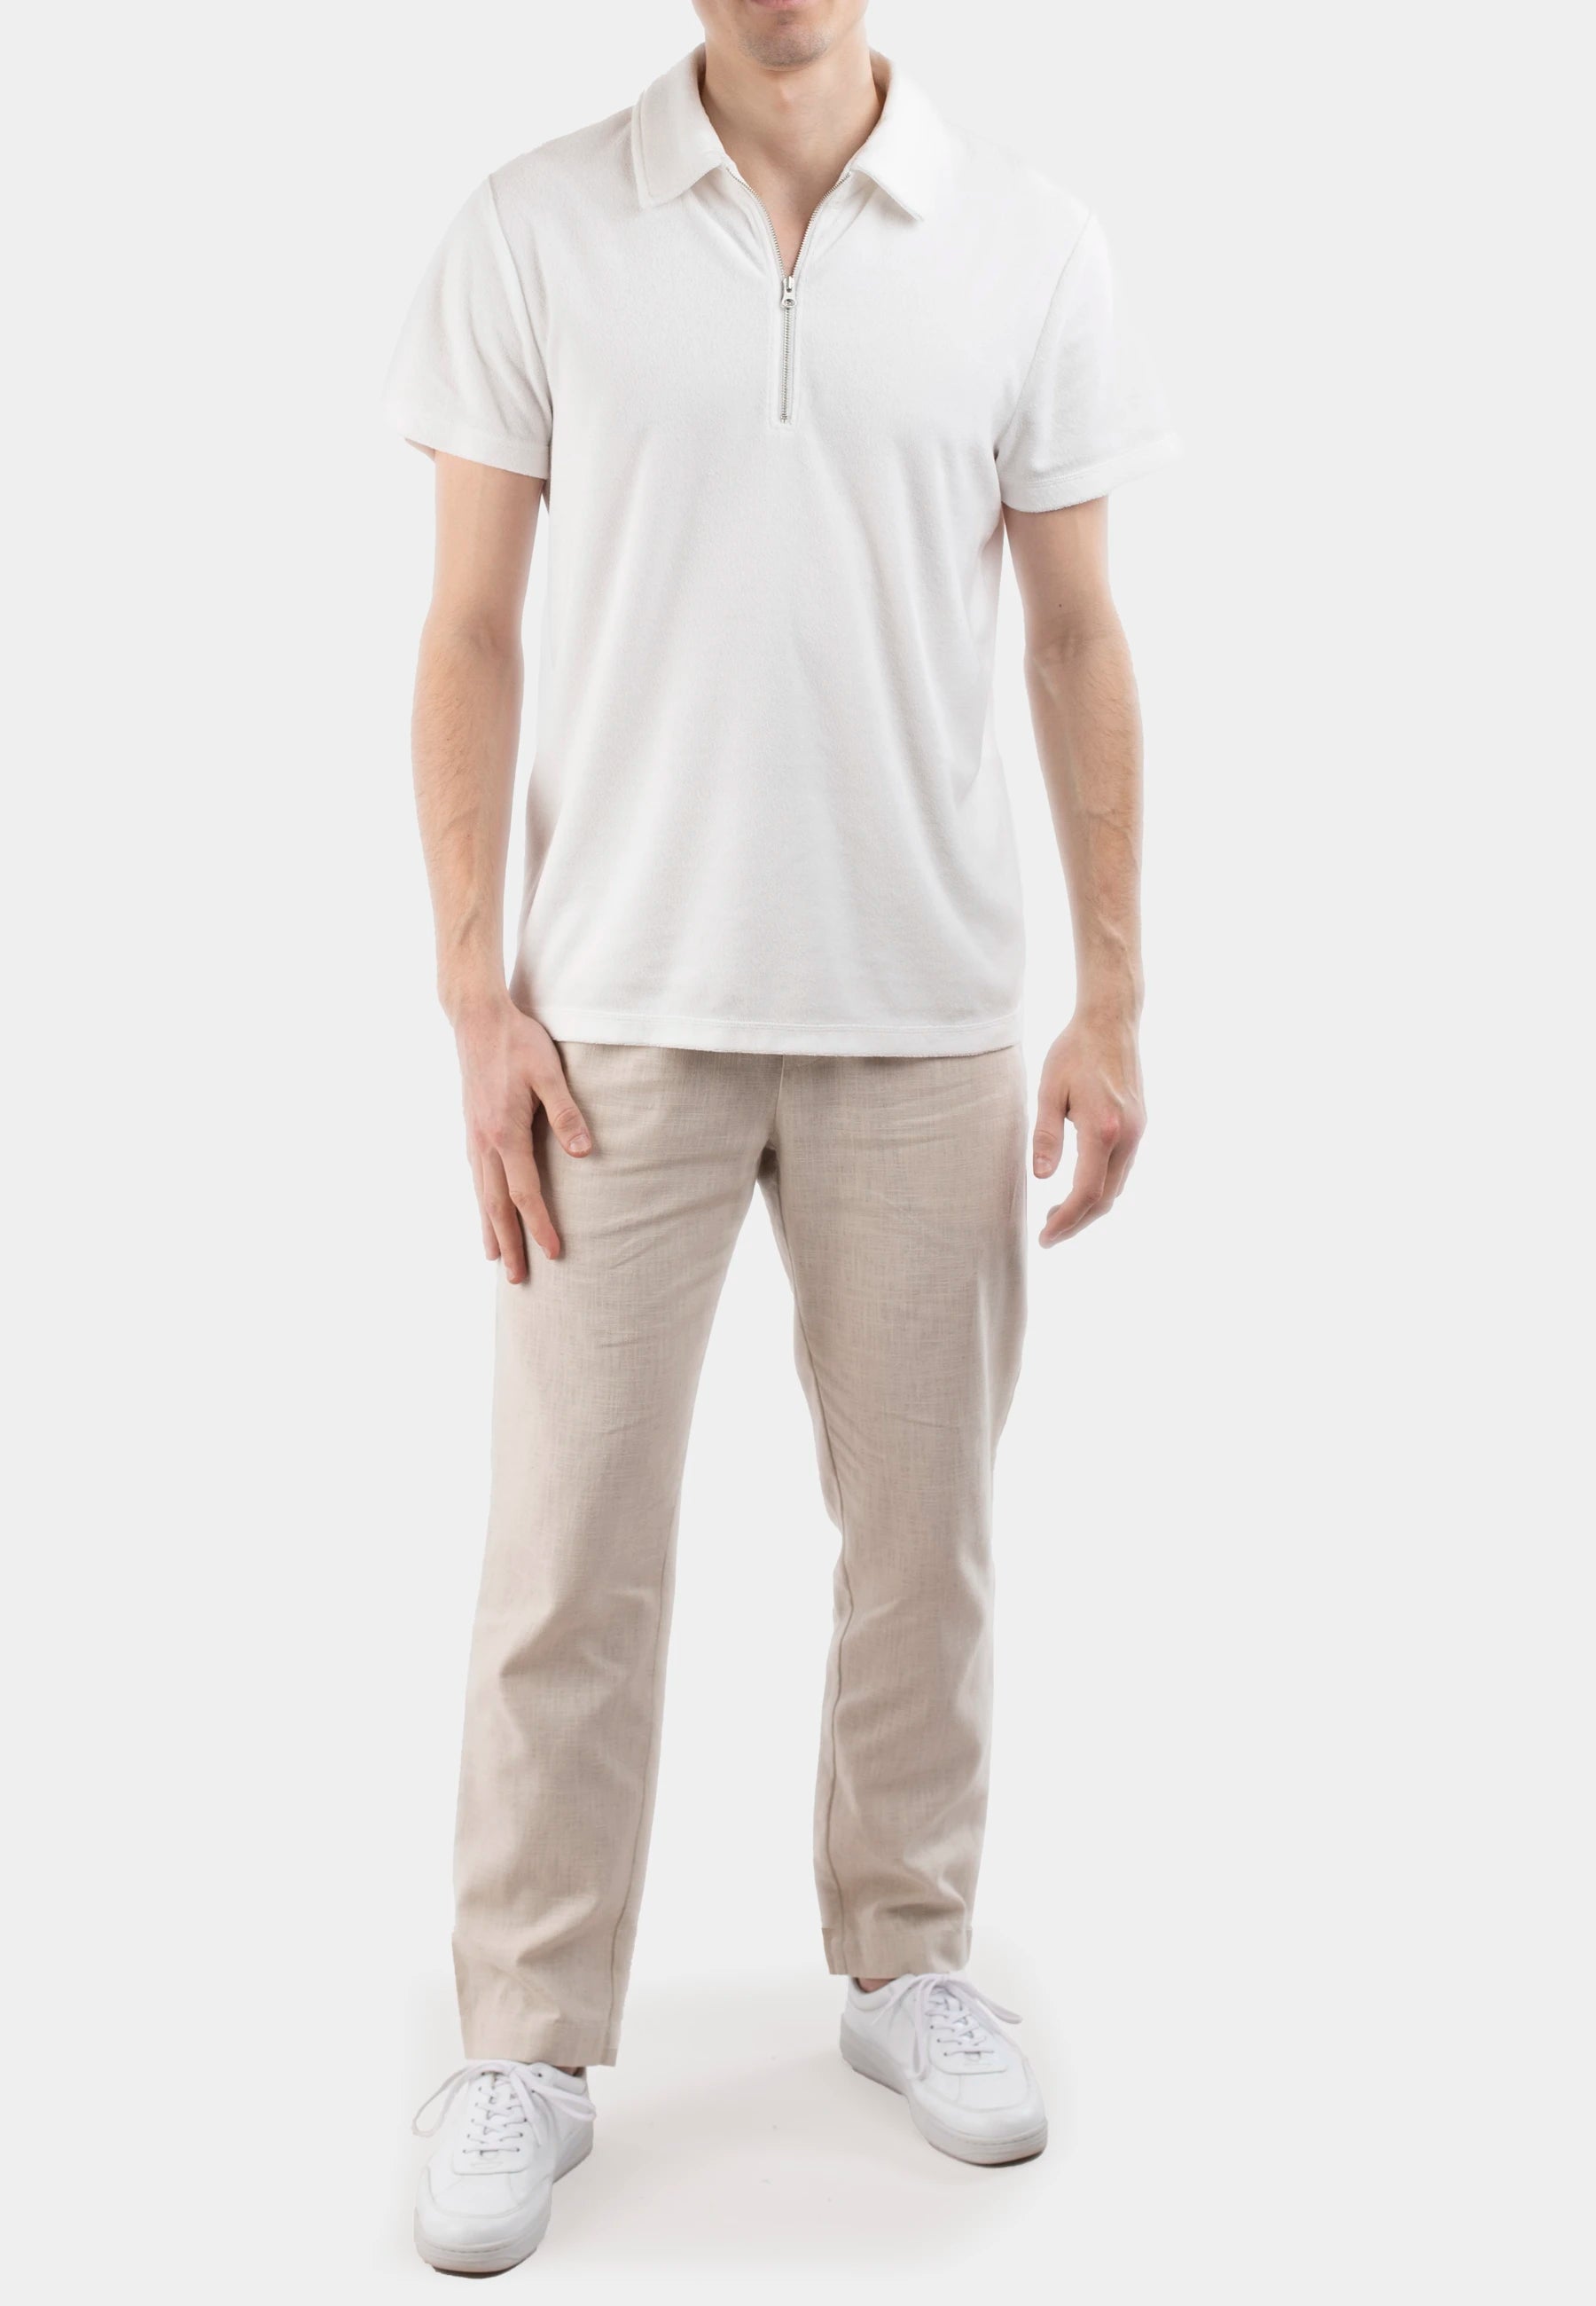 Cay terry half zip shirt - Off white